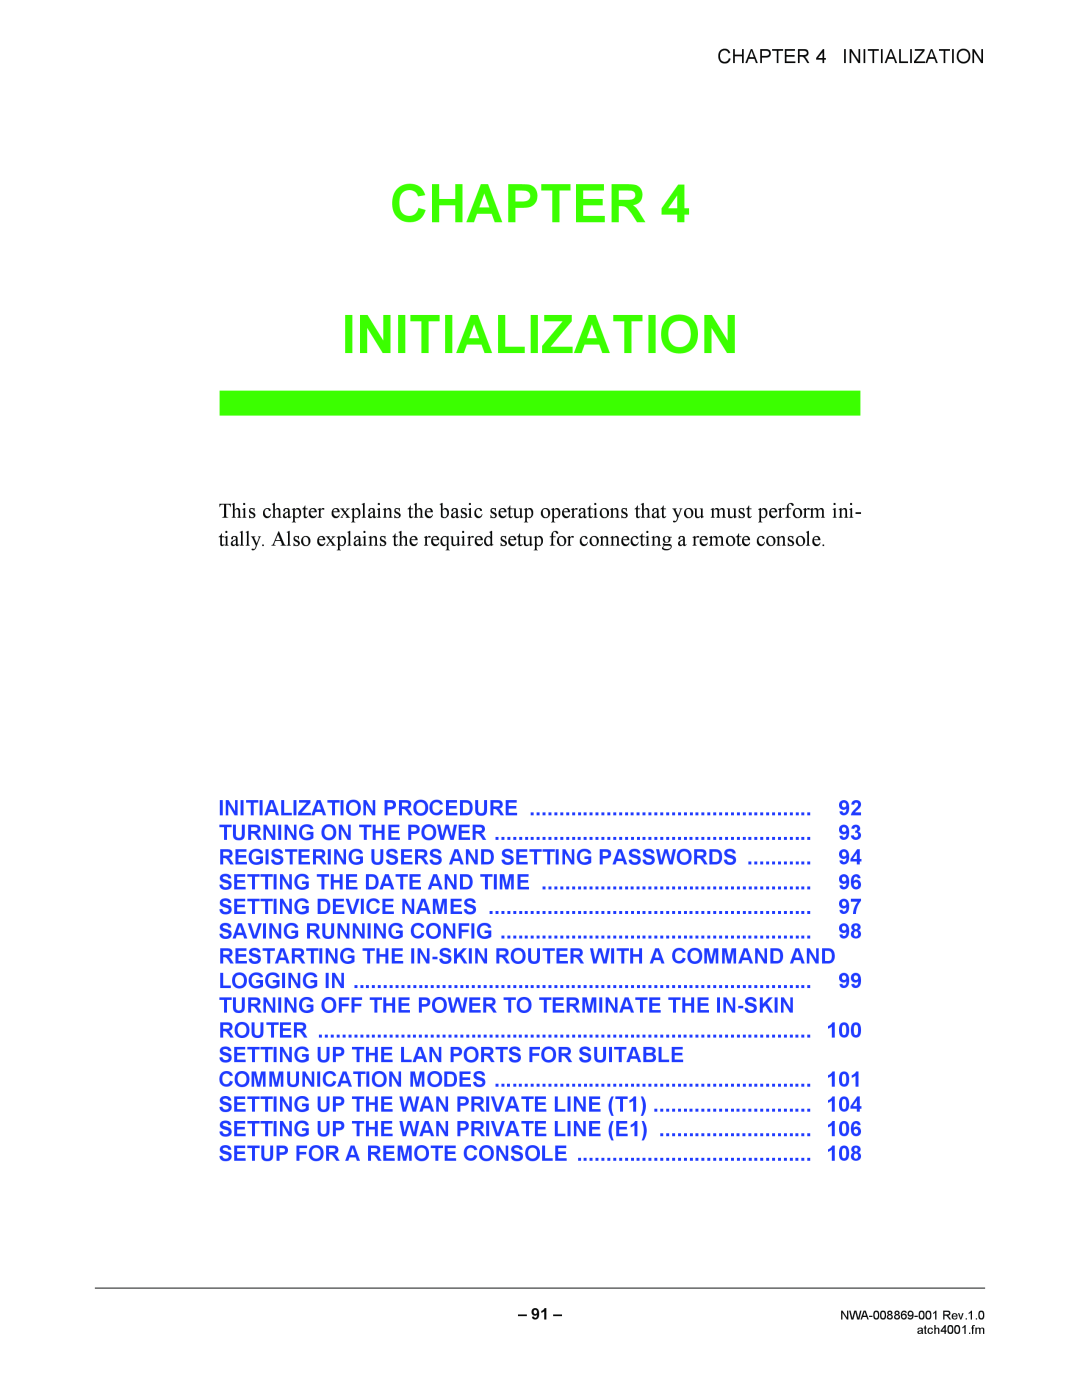 NEC NWA-008869-001 manual Chapter Initialization 